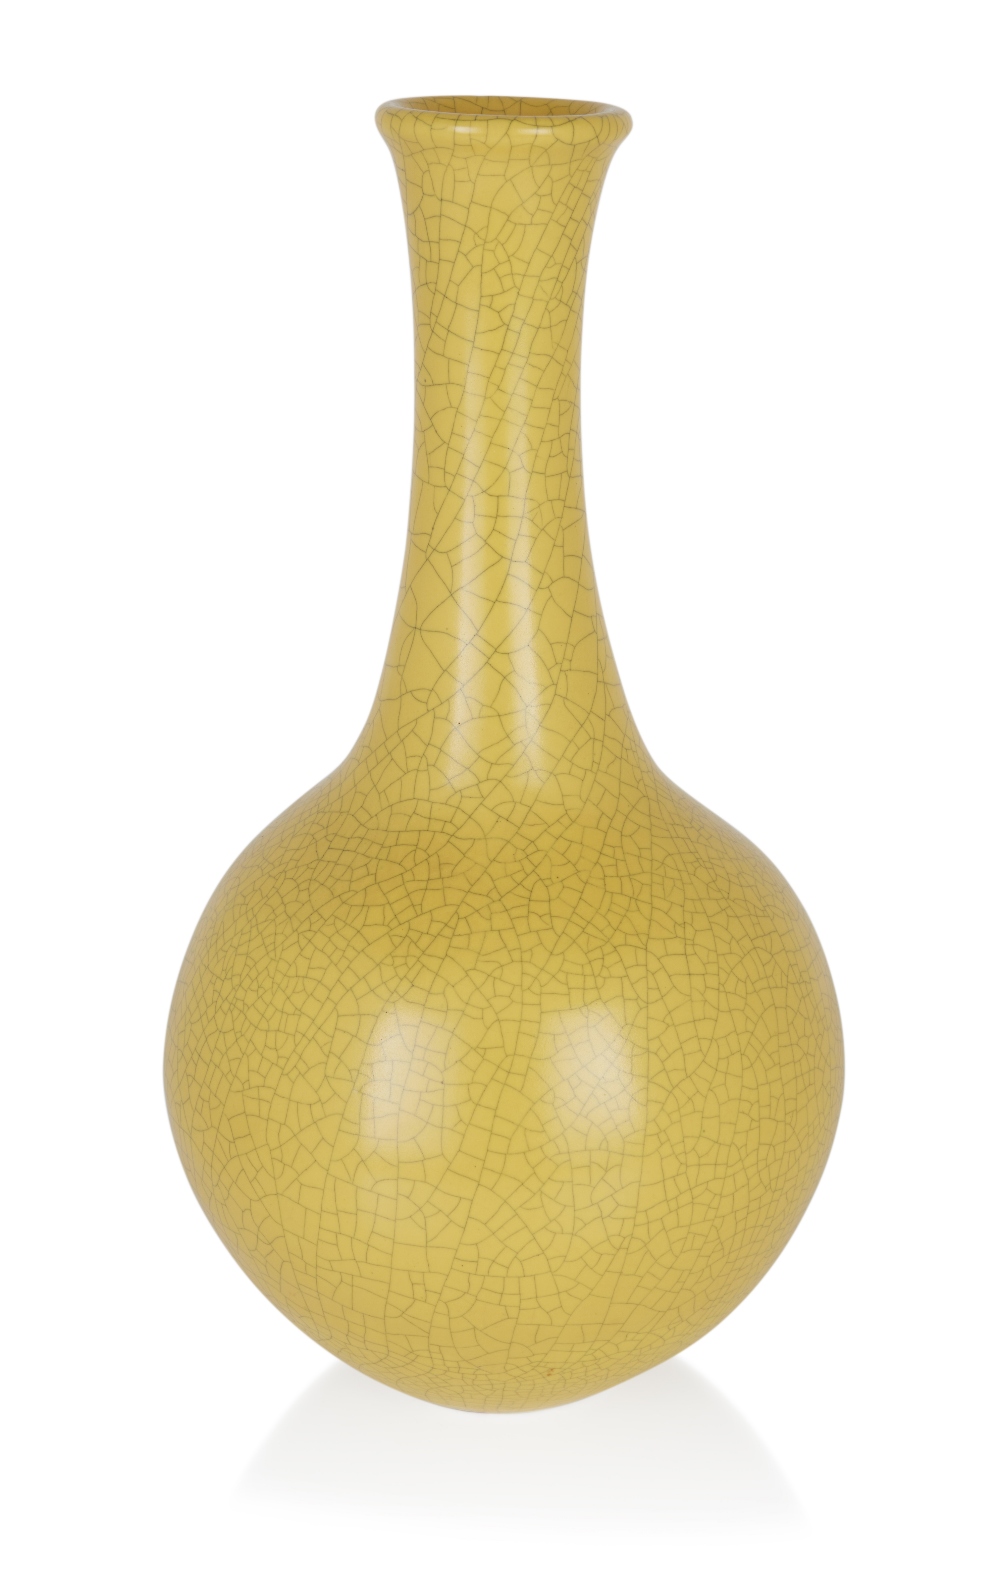 Thelma Marcuson (1919-2009), Studio Pottery yellow crackle glaze bottle vase, mid 1980s,